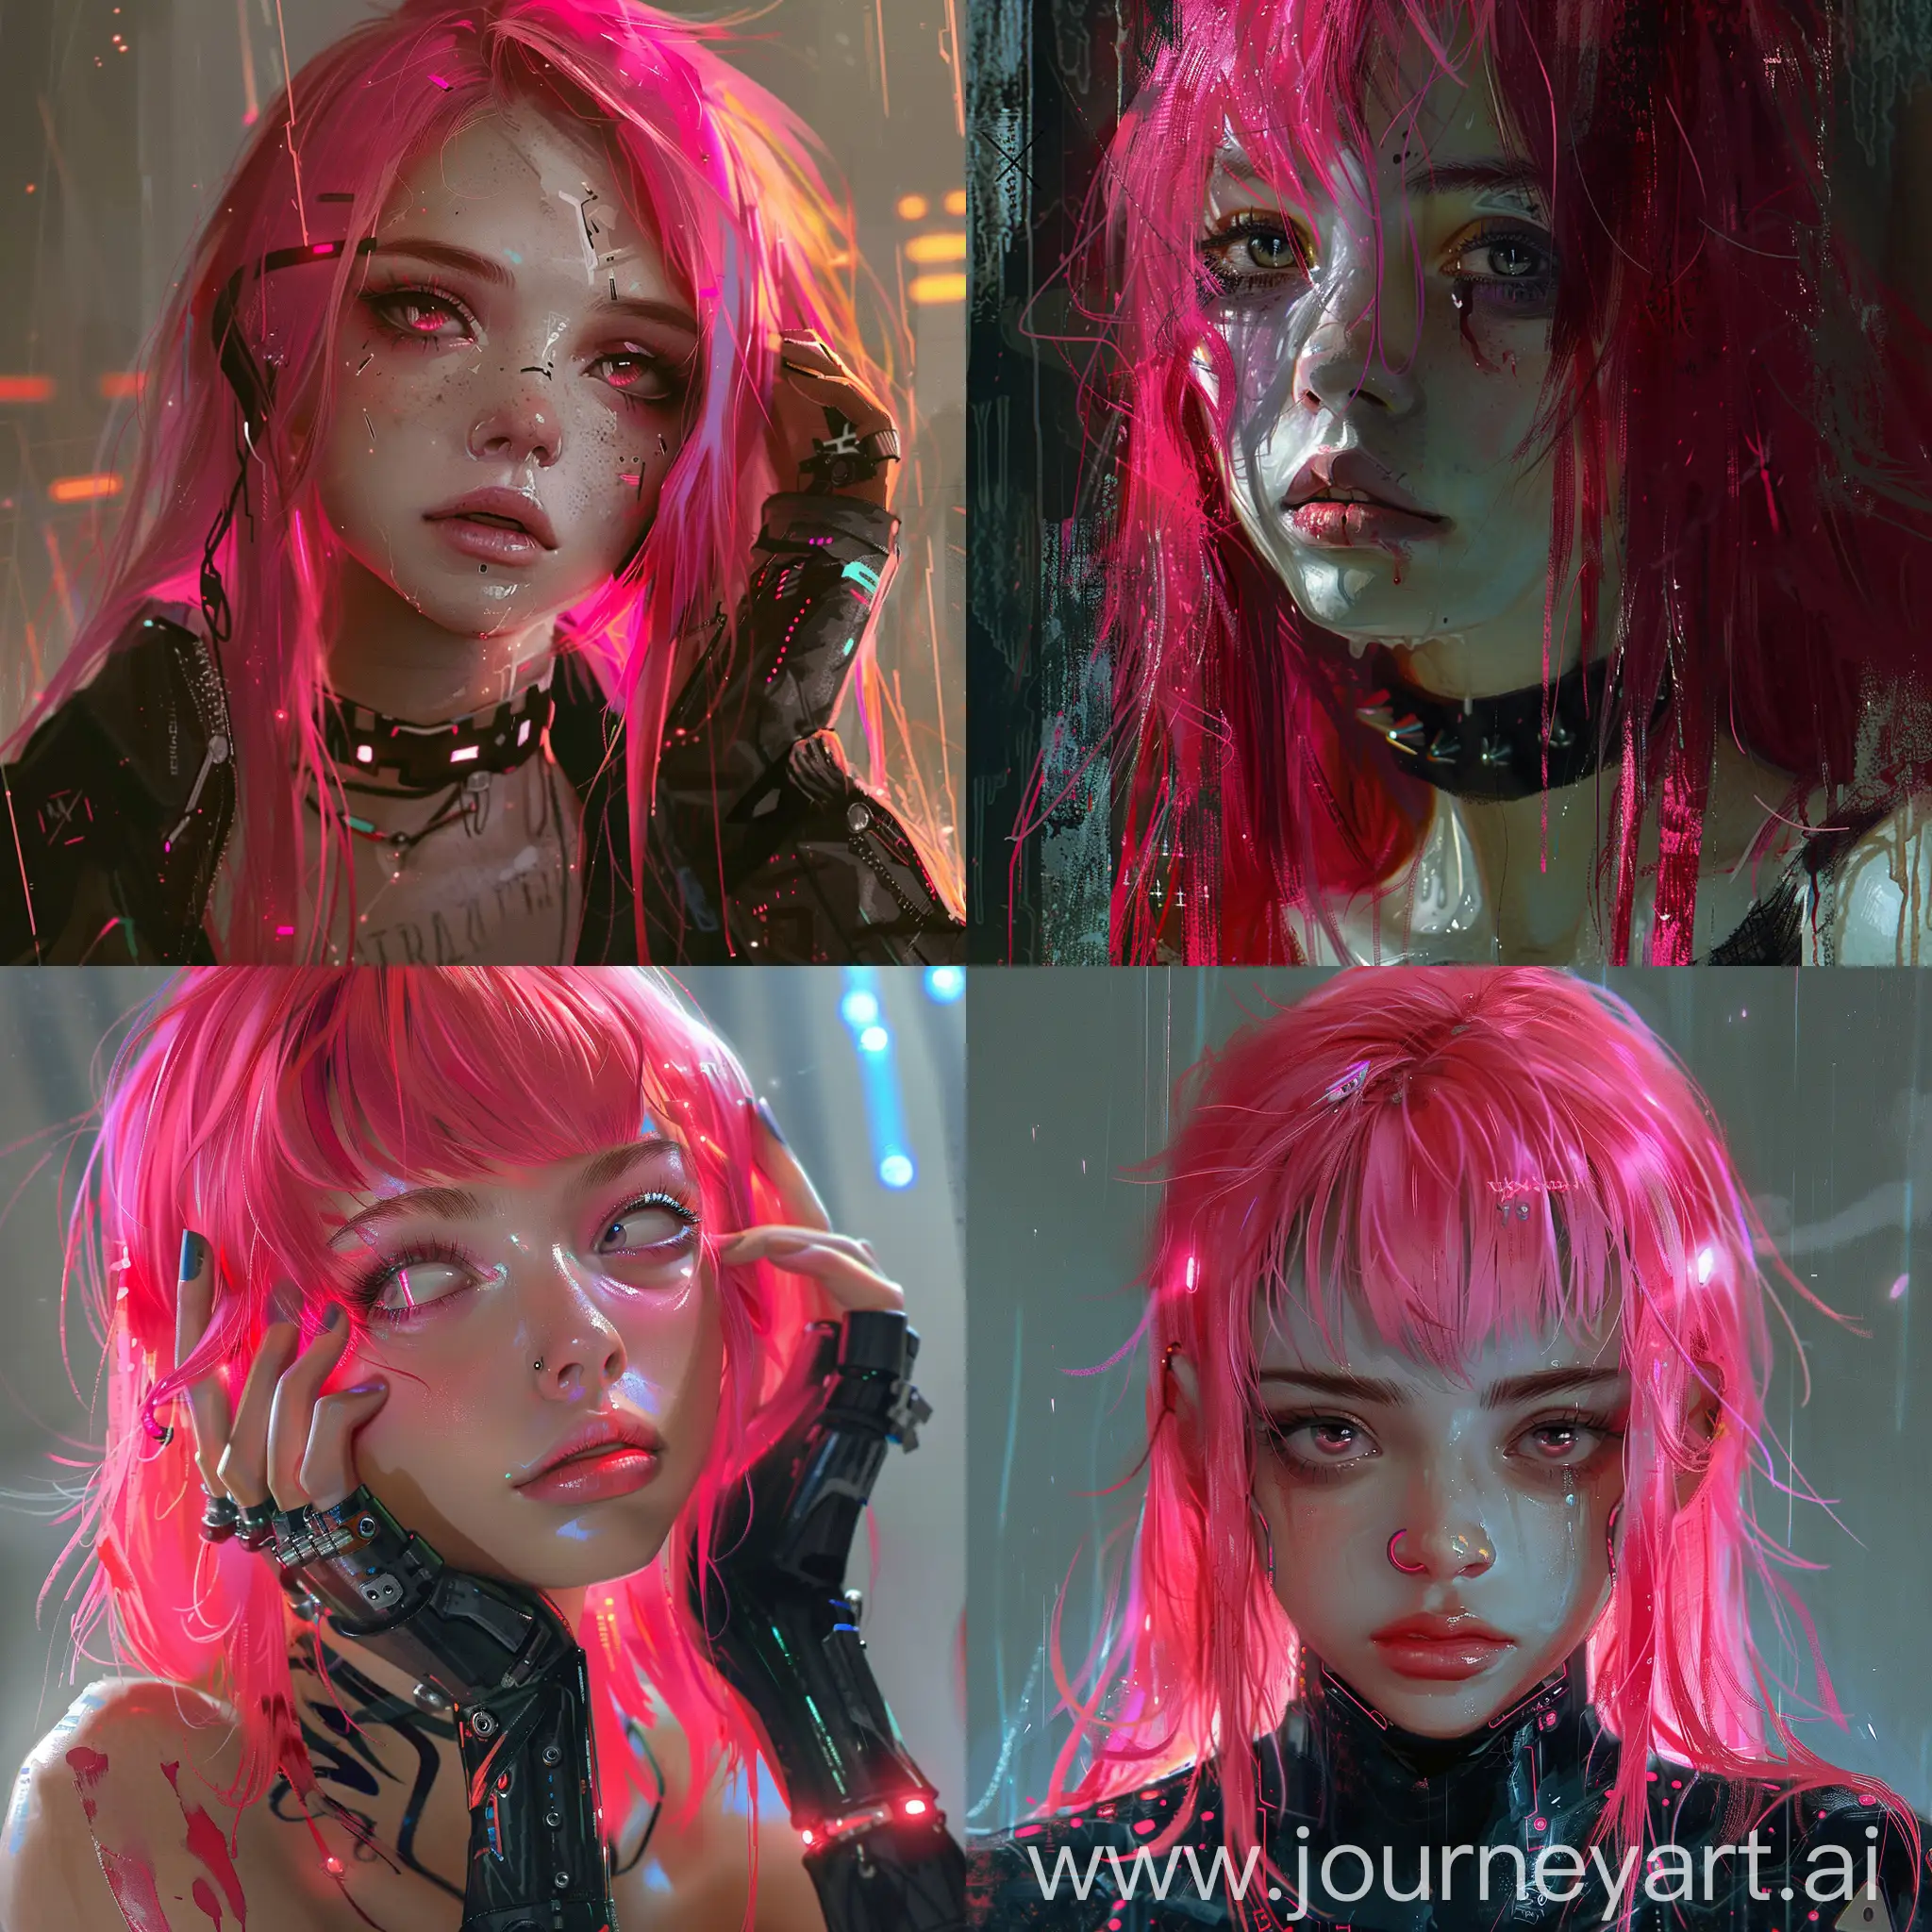 Sad girl 20 years old, passion, beatiful and cute, pink hair, cyberpunk style modern art
 